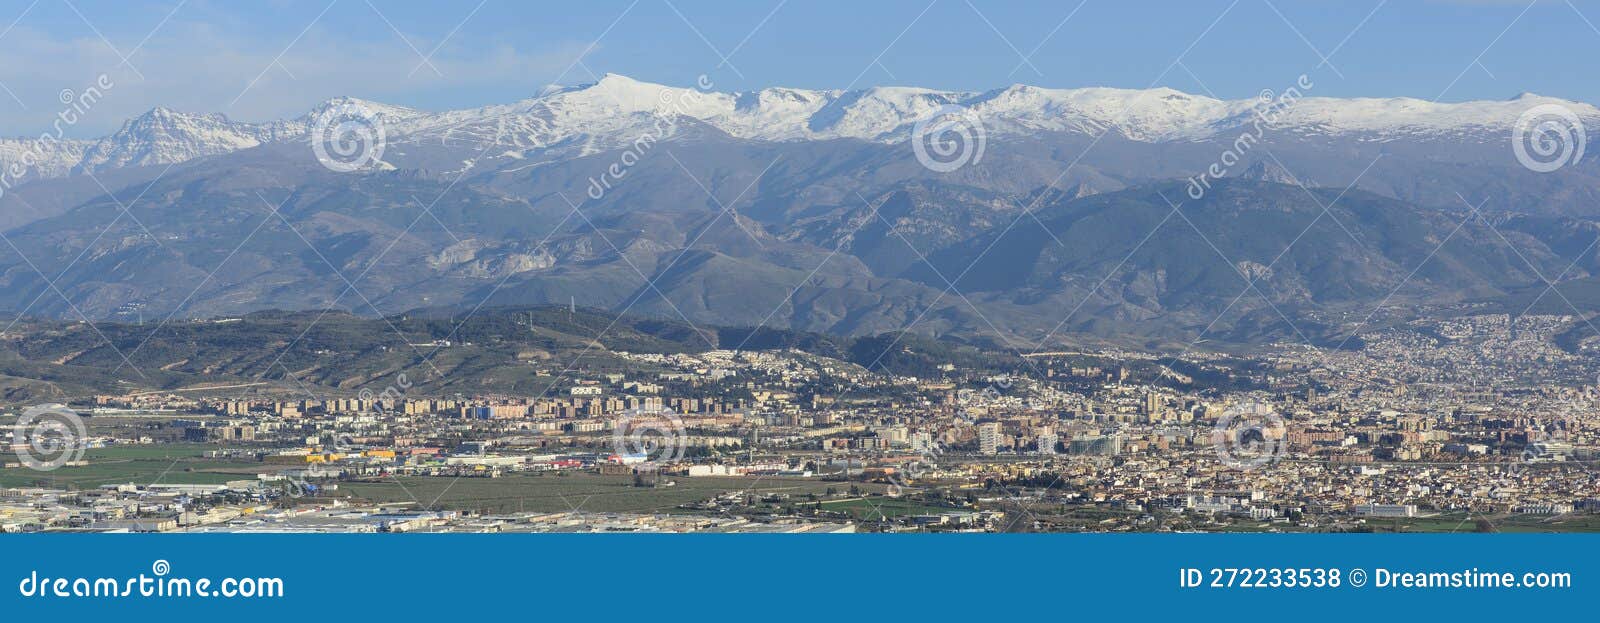 panoramic view of the city of granada, spain